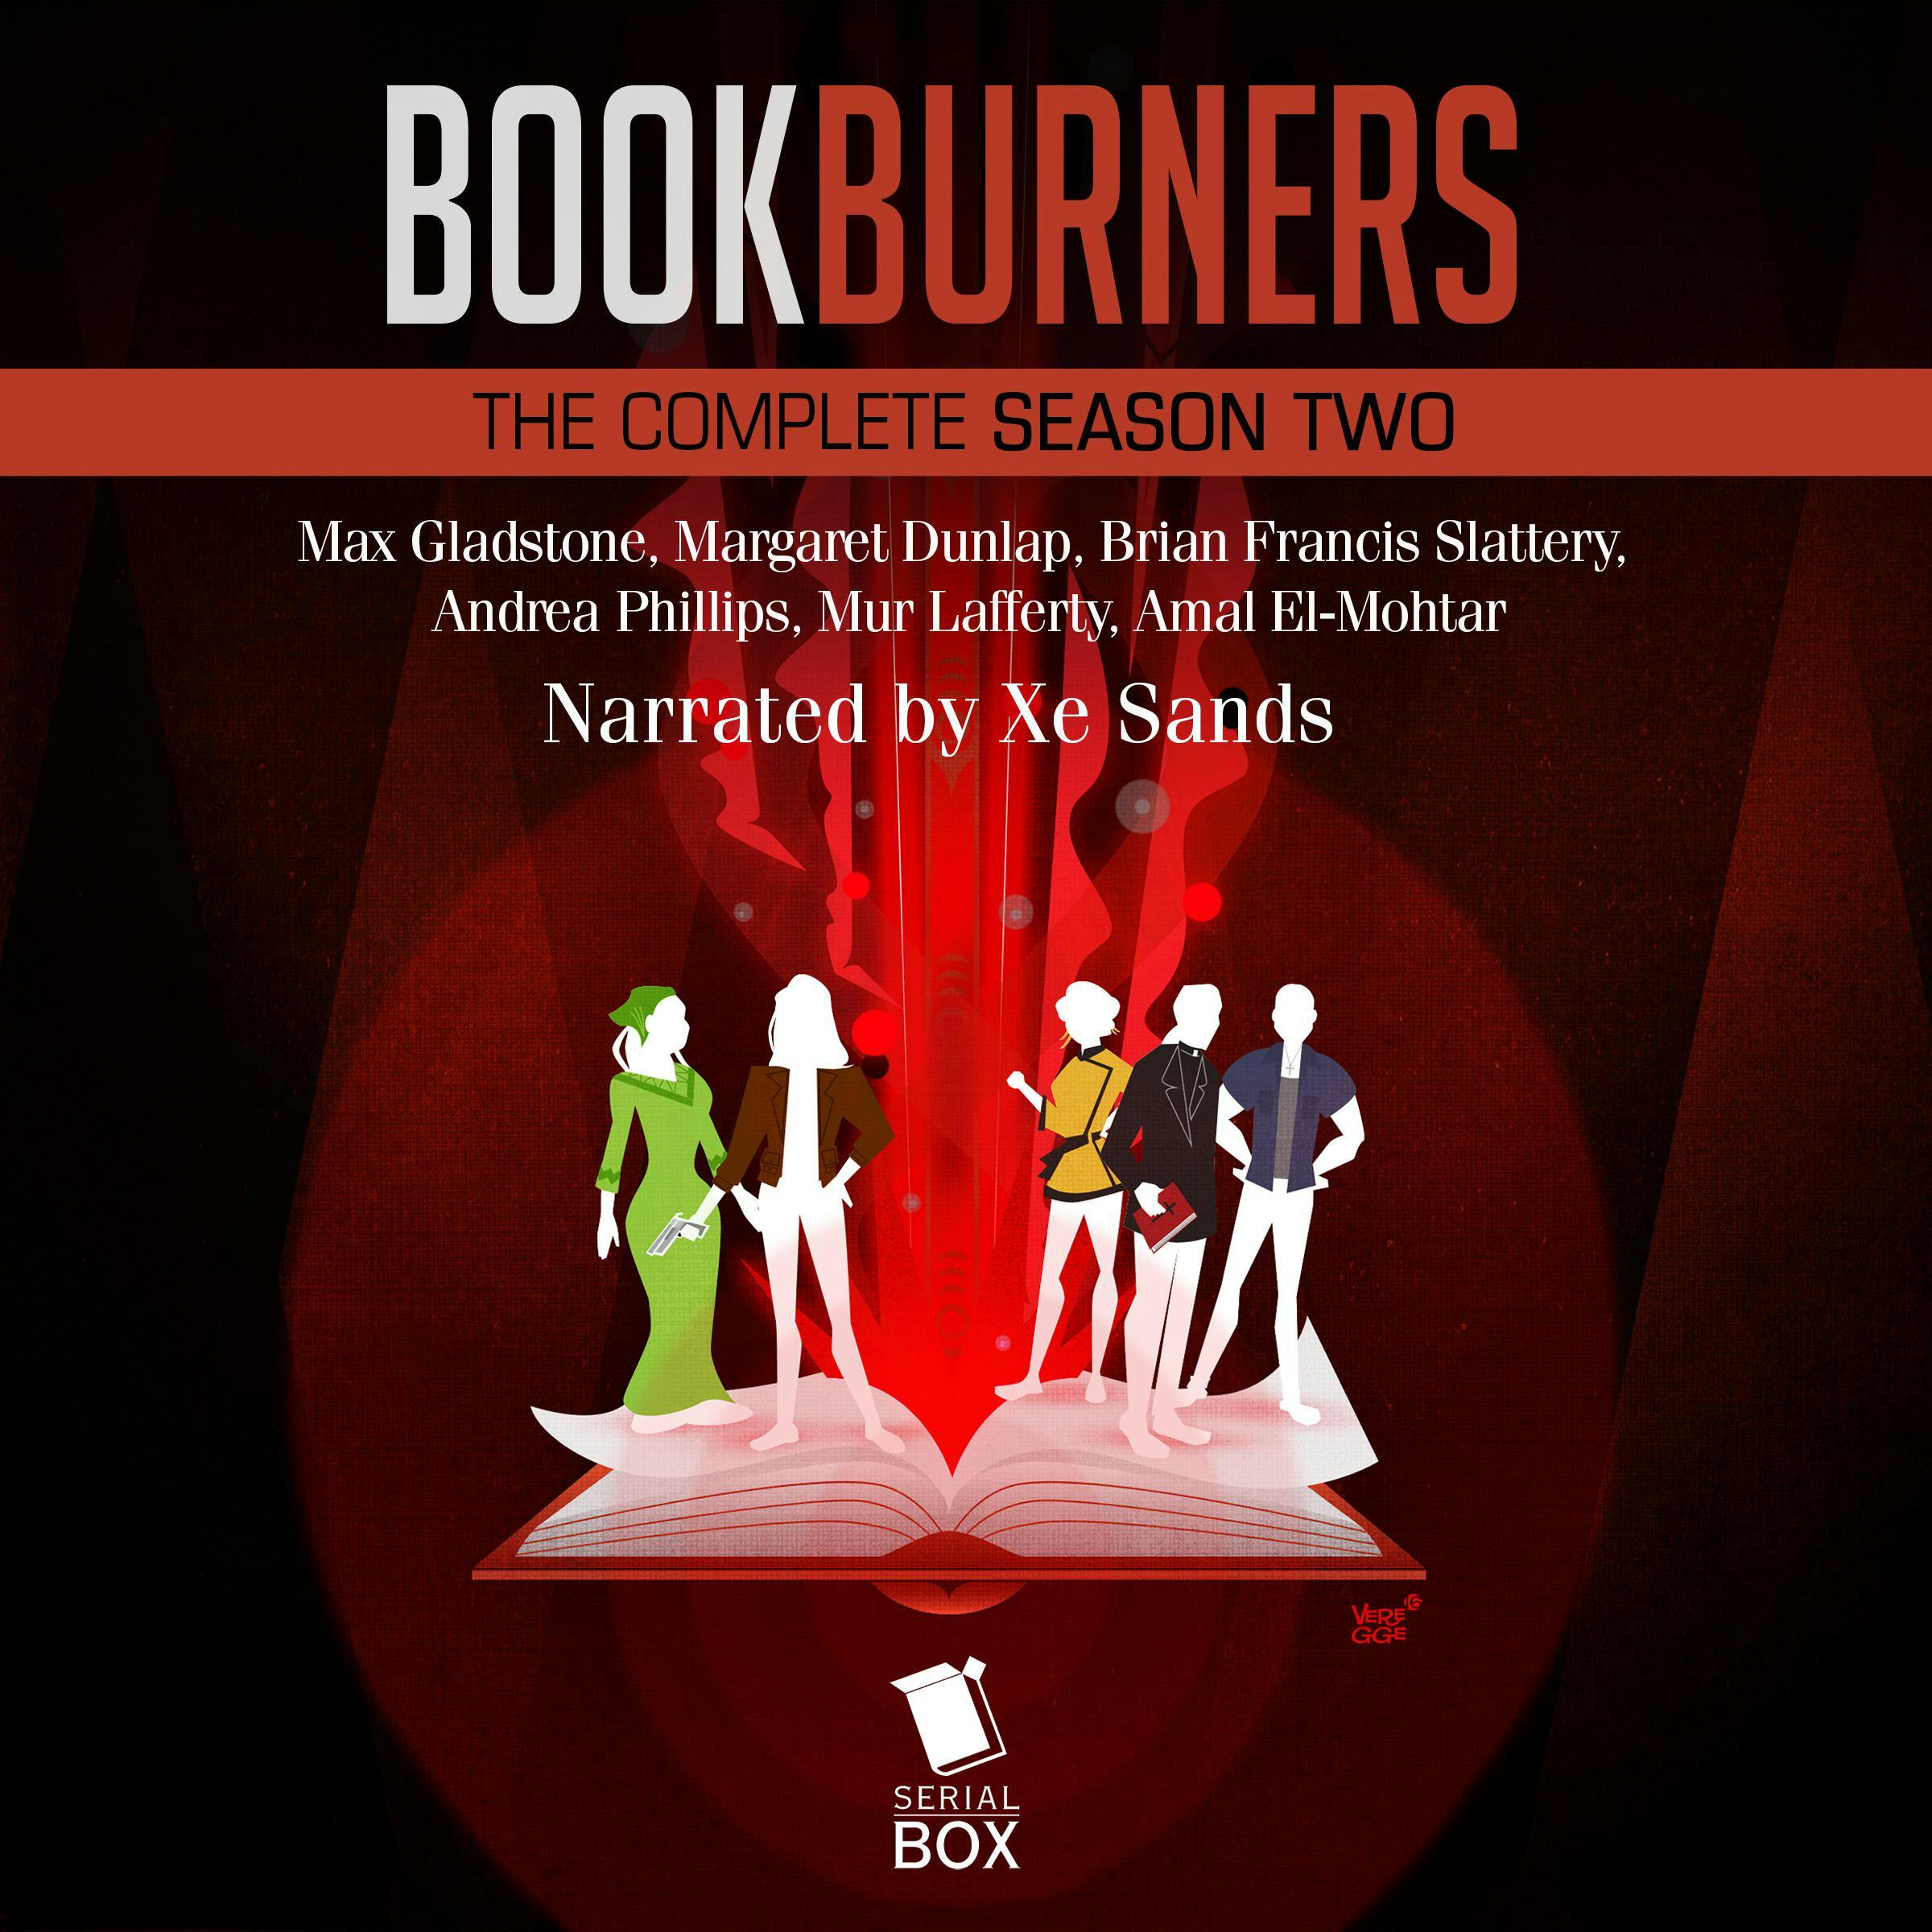 Bookburners: Season 2, Episode 2: Webs - Andrea Phillips